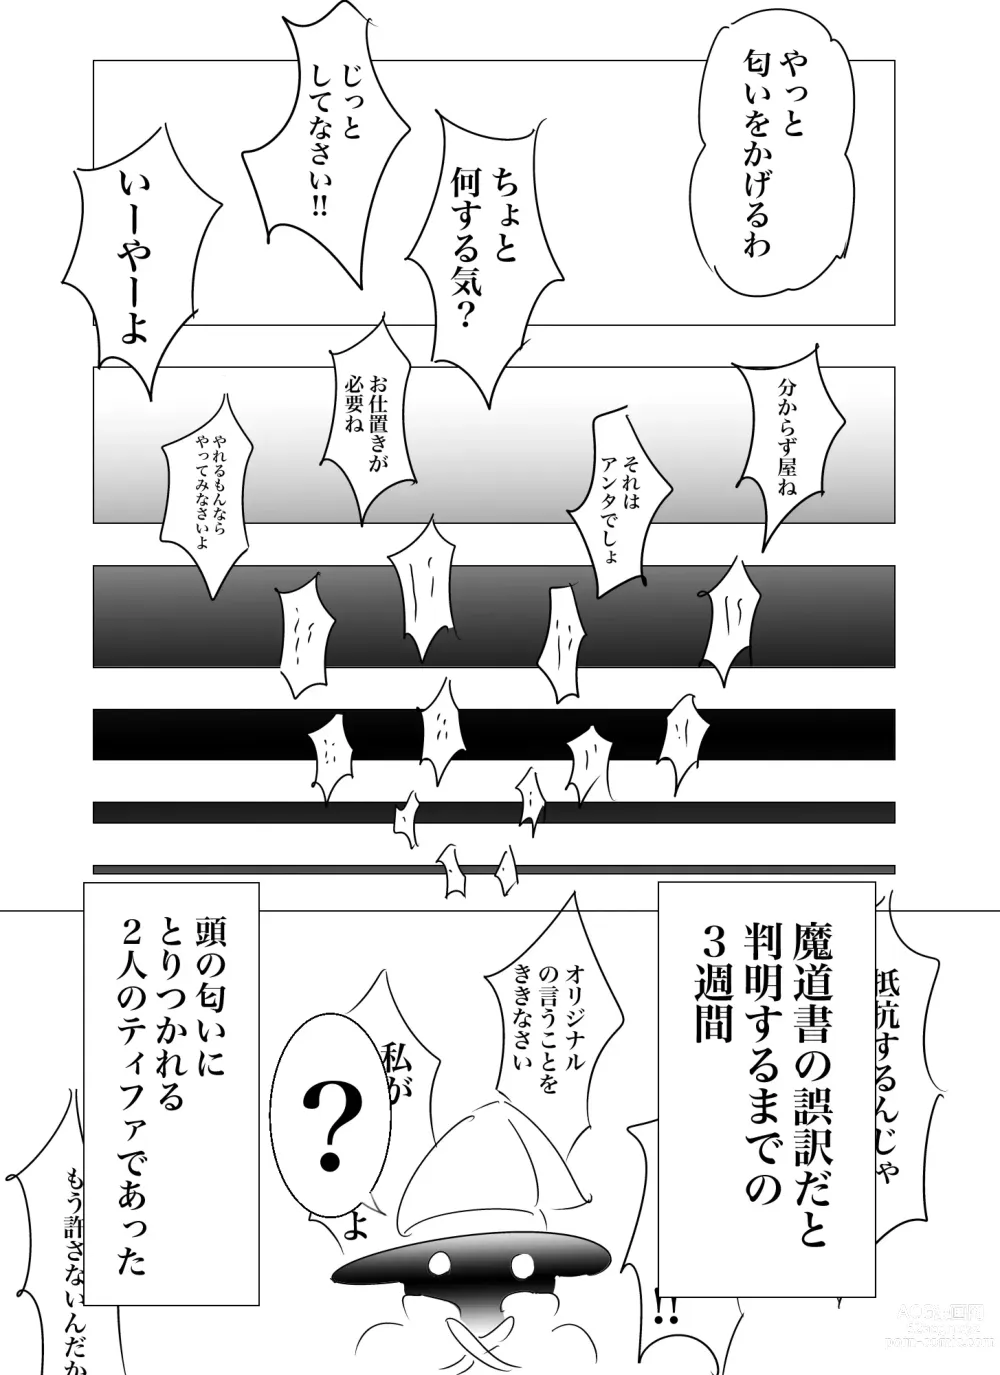 Page 156 of doujinshi Doppel Lesbian January 2022